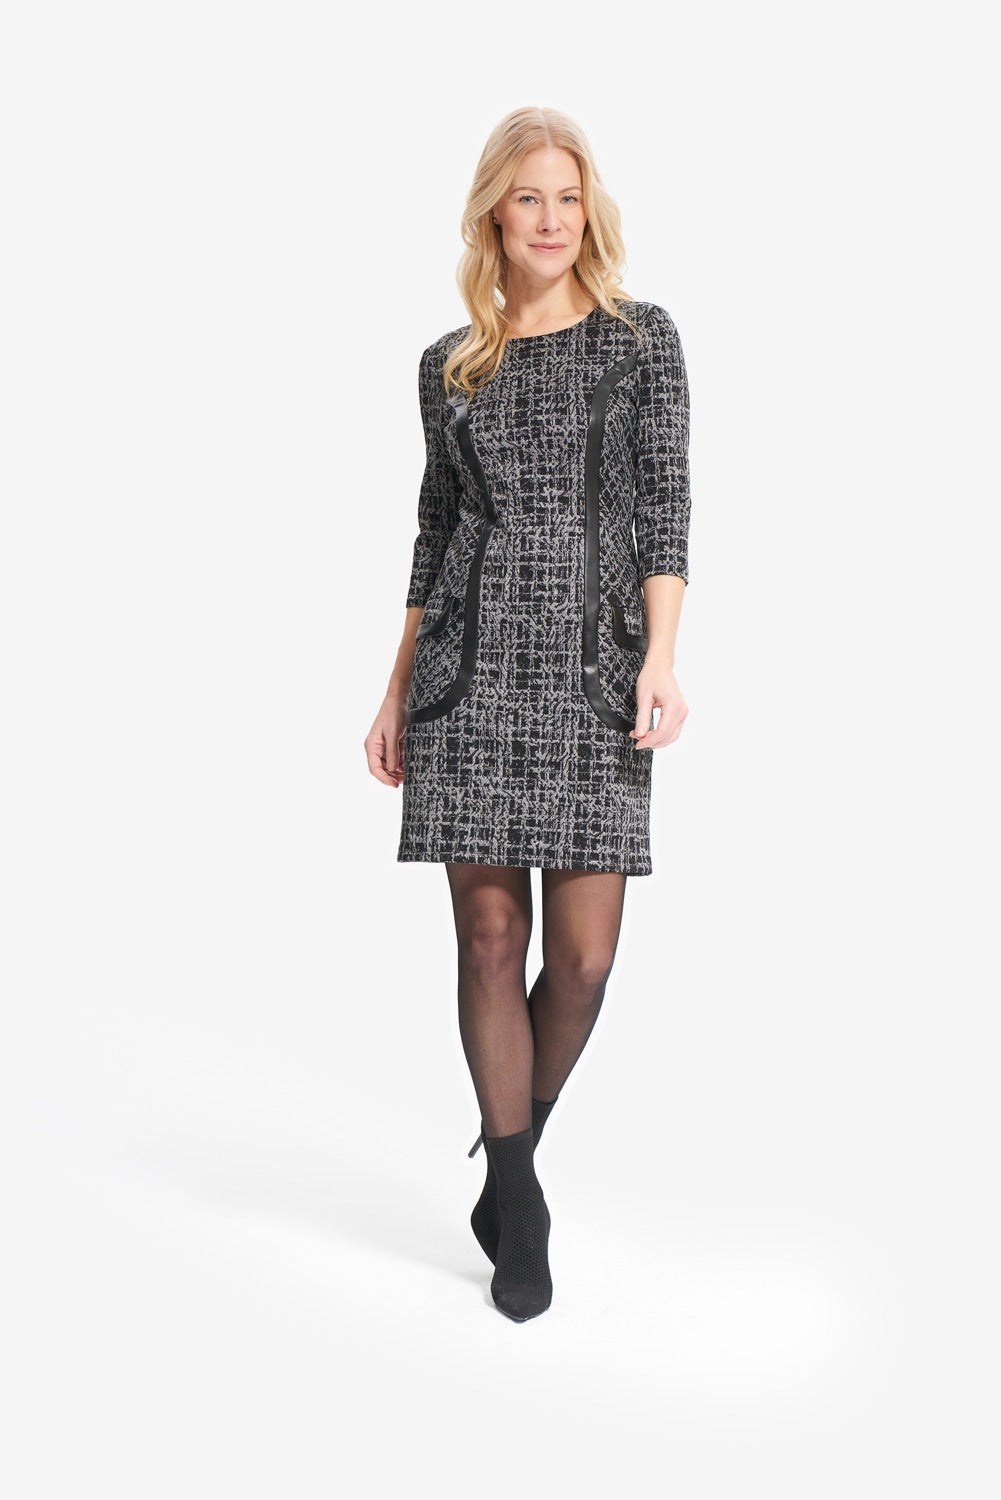 Joseph Ribkoff Black-Grey 3-4 Sleeve Printed Dress Style 214152